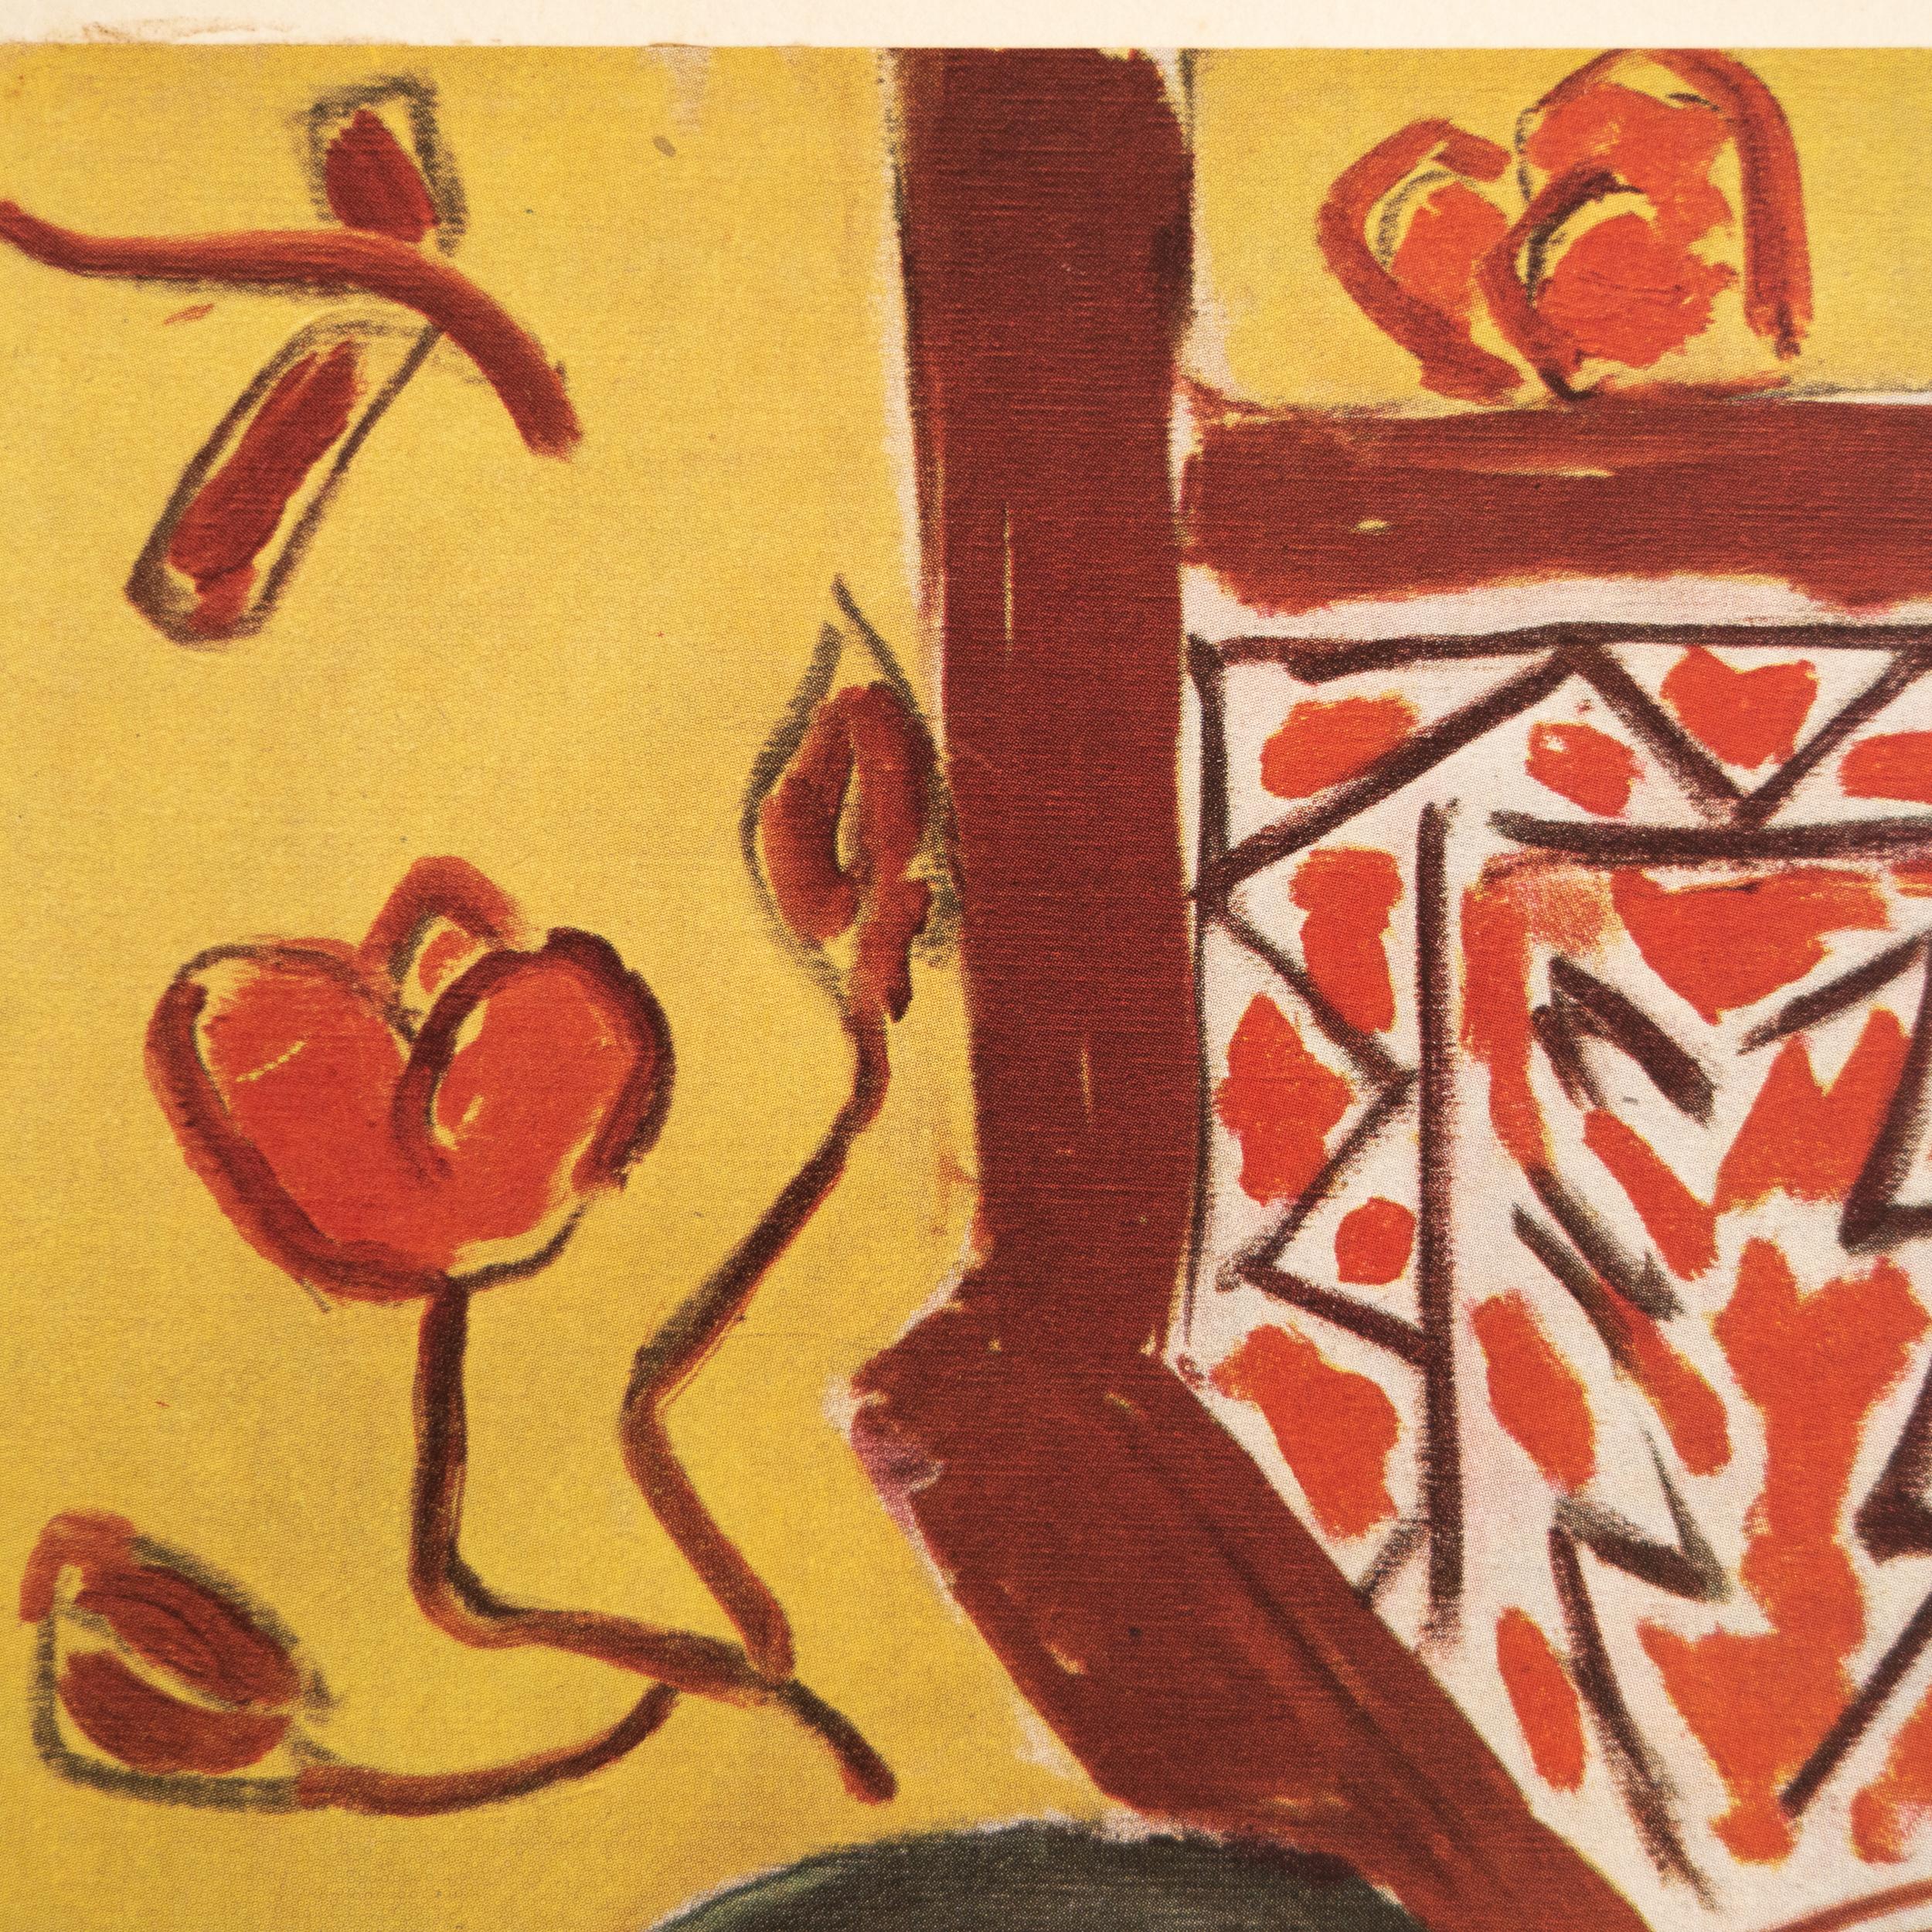 Rare Henri Matisse Lithograph, Editions du Chene, 1943 For Sale 1